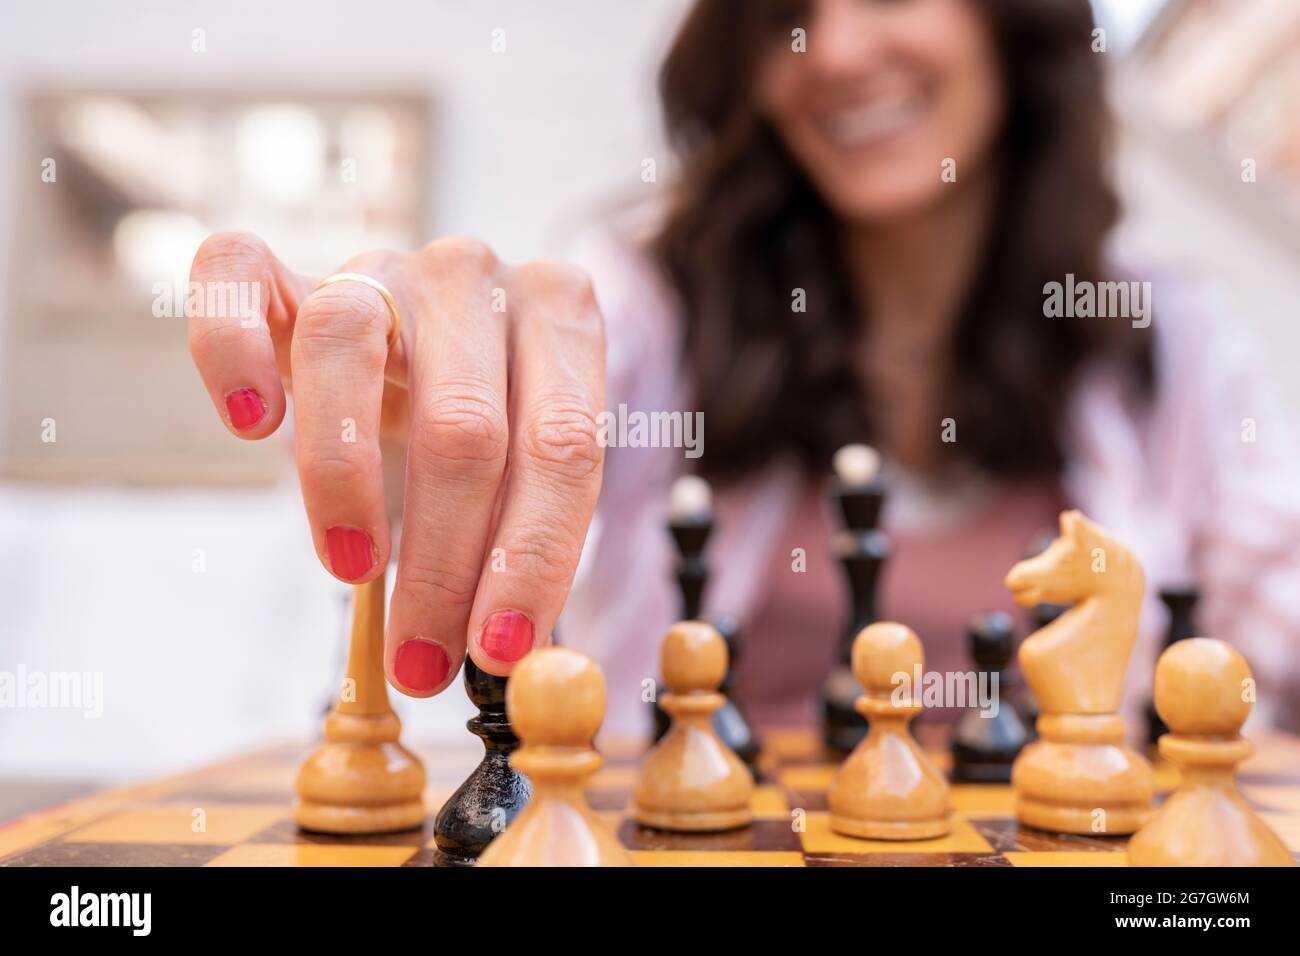 Javier Peinado gana al ajedrez en Mures